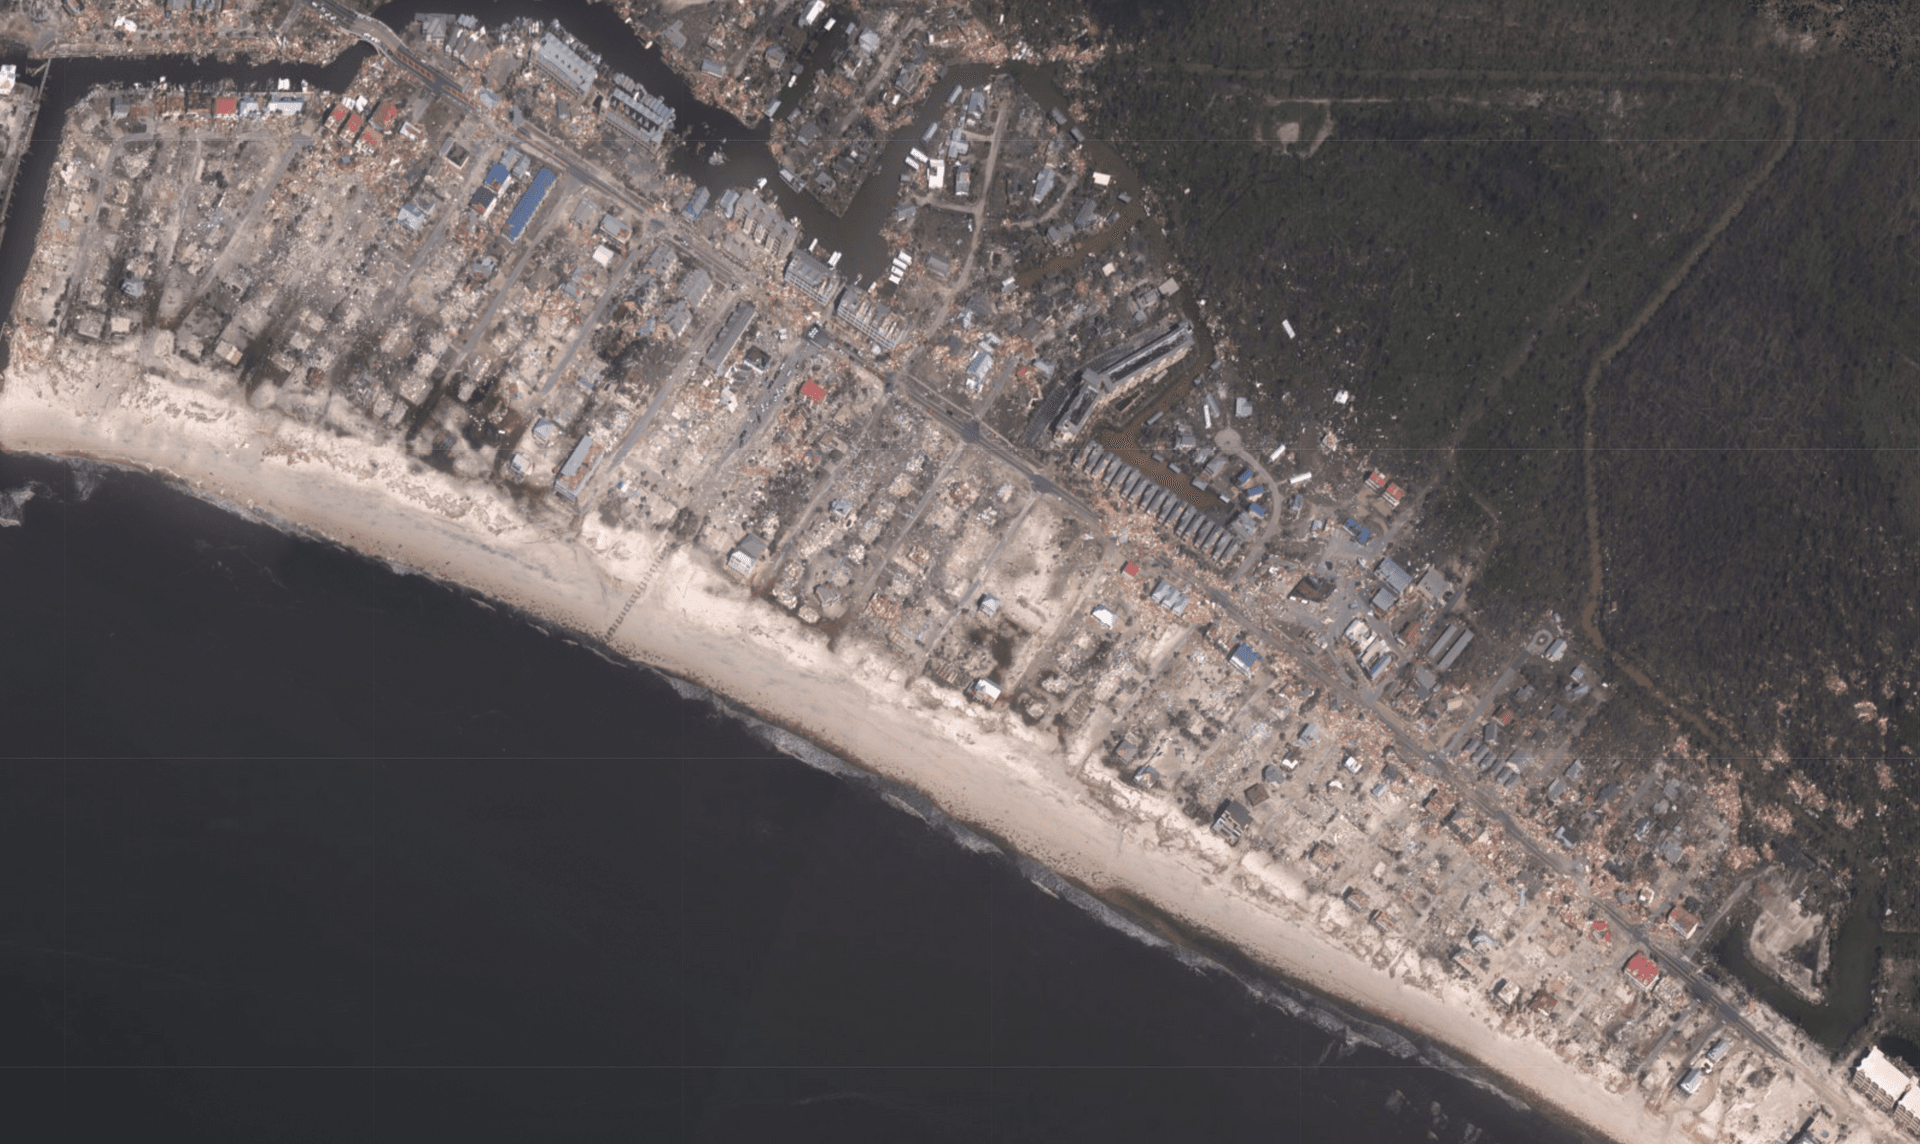 Mexico Beach, Florida, after Hurricane Michael